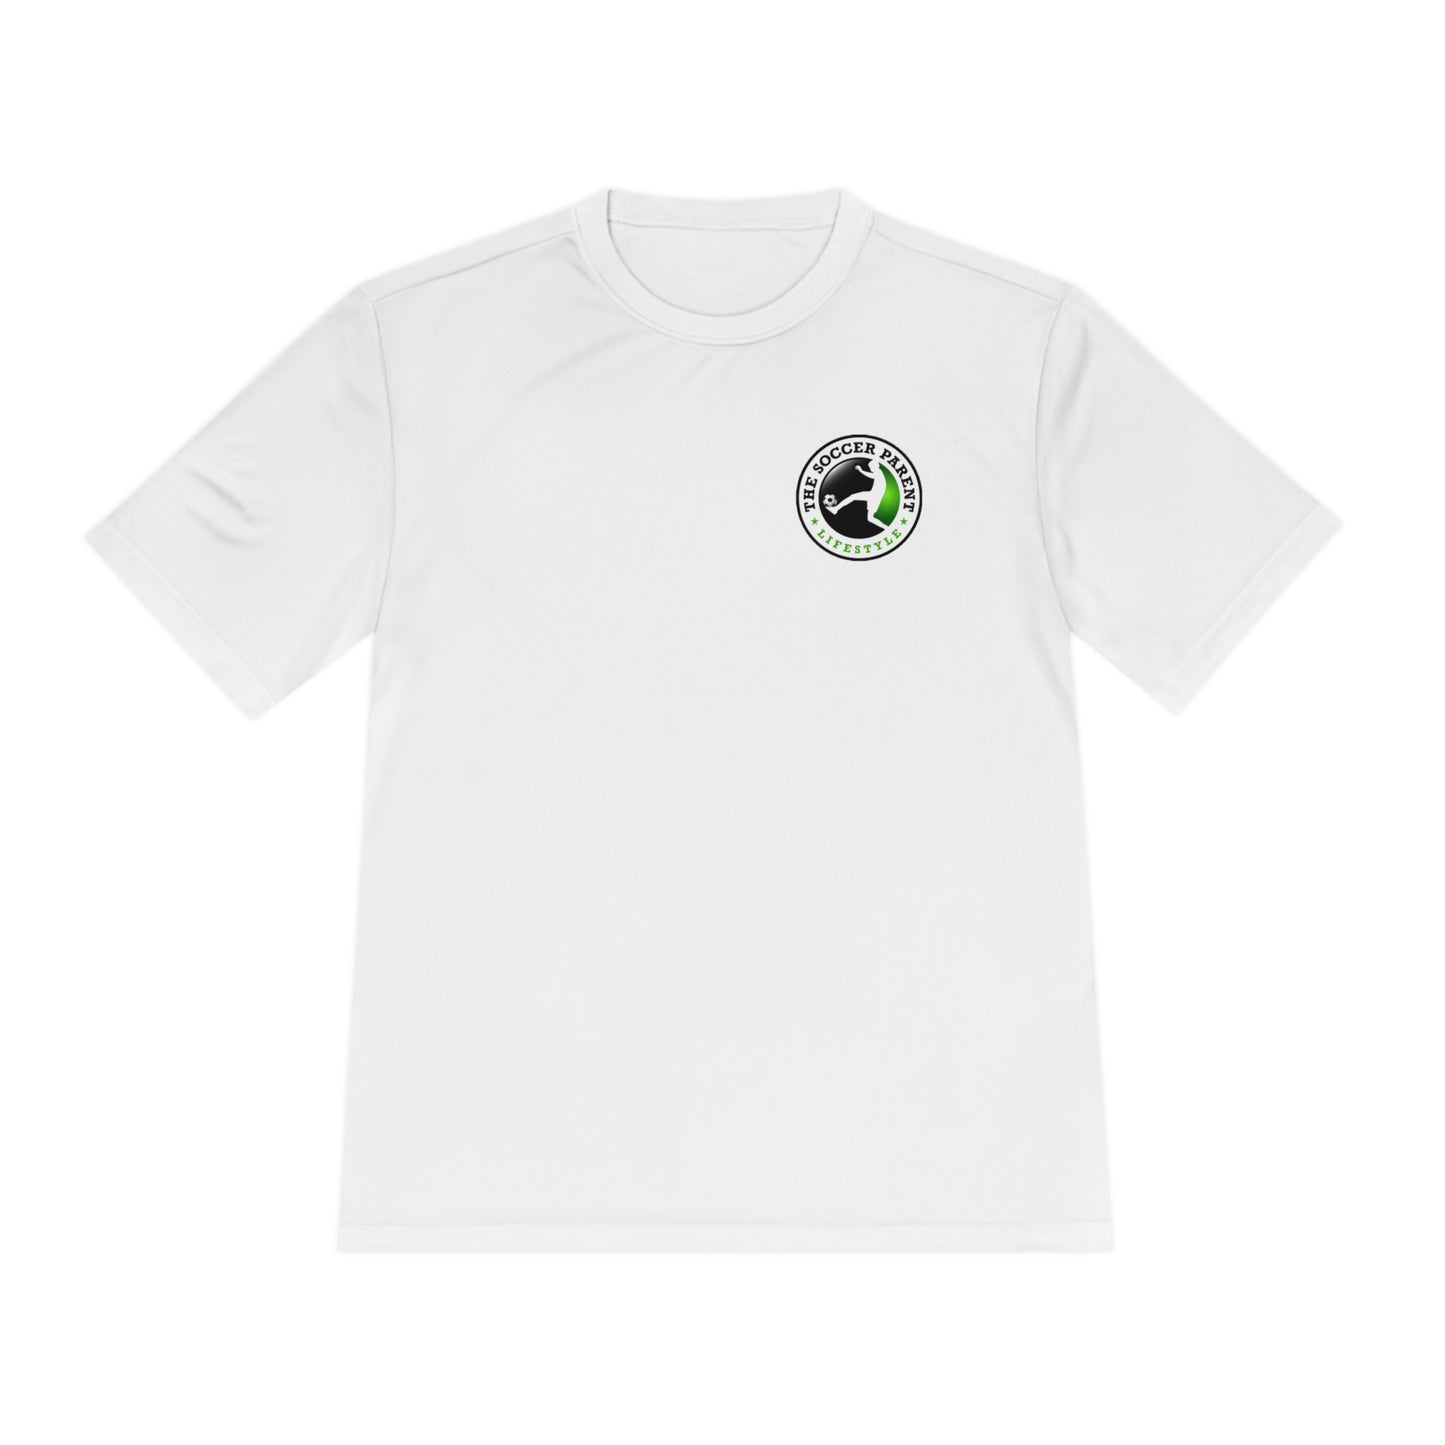 Soccer Parent Lifestyle SOCCER MOM Athletic T-Shirt (Unisex)